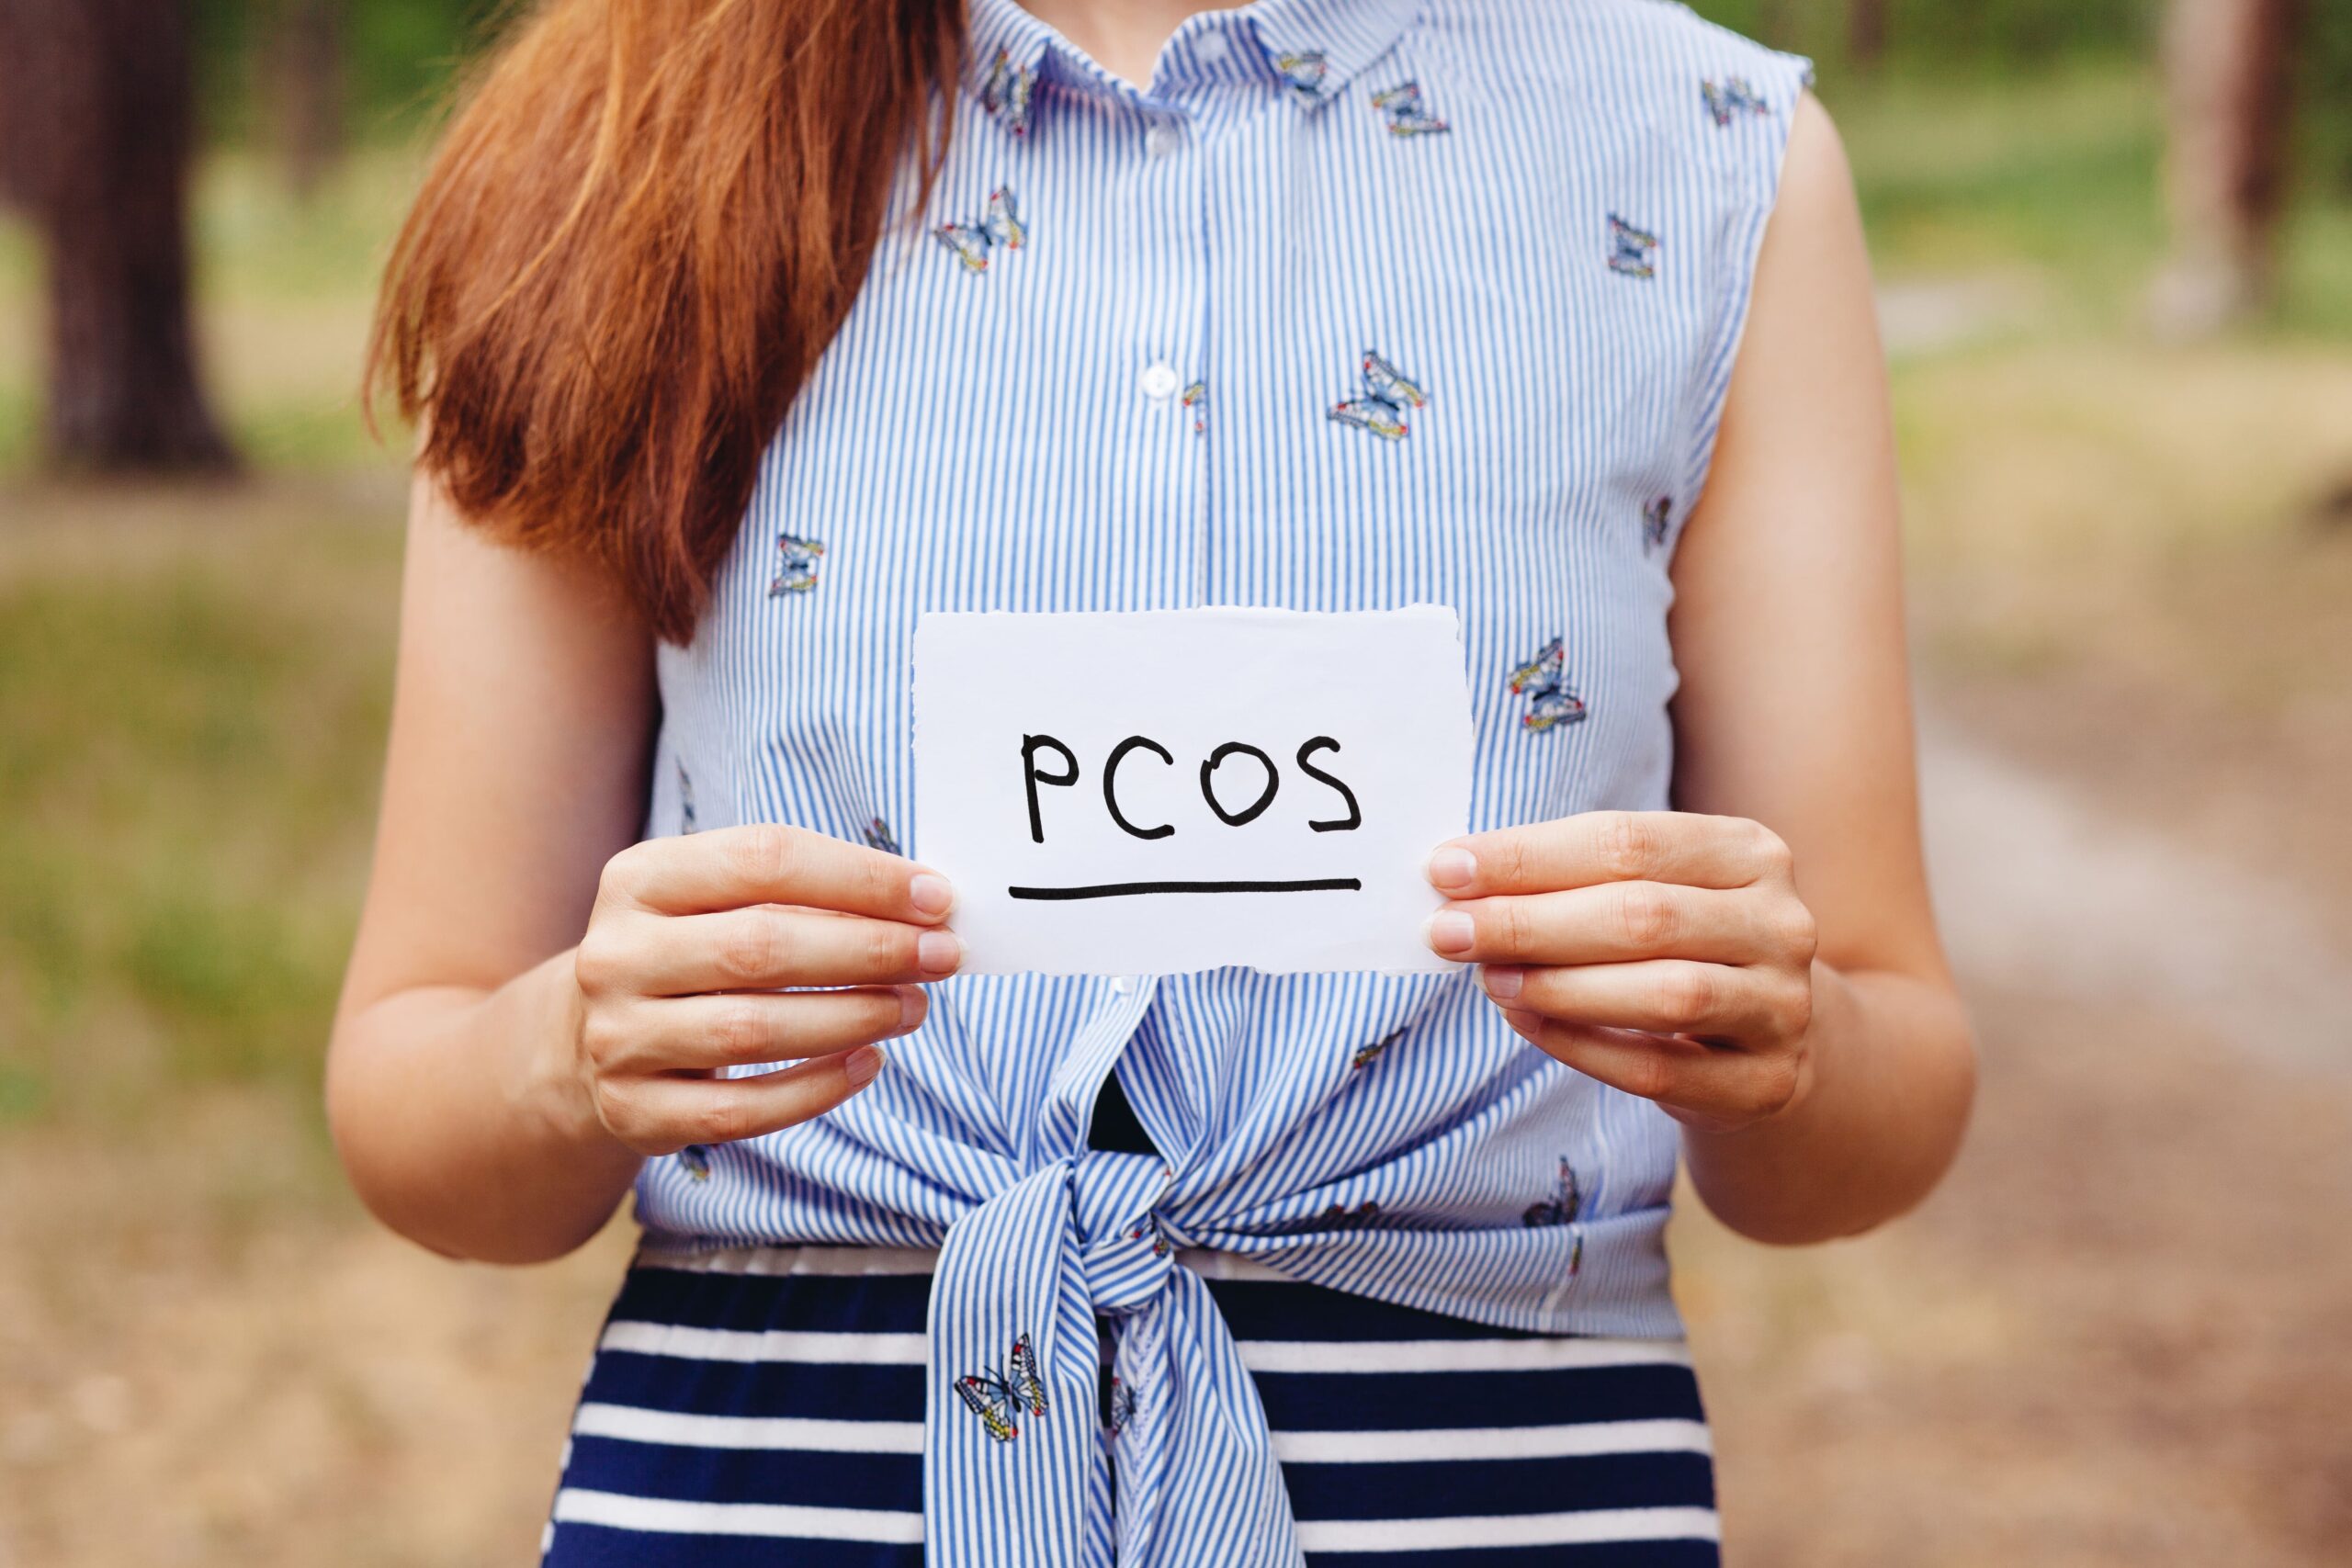 A women holding a PCOS awareness sign